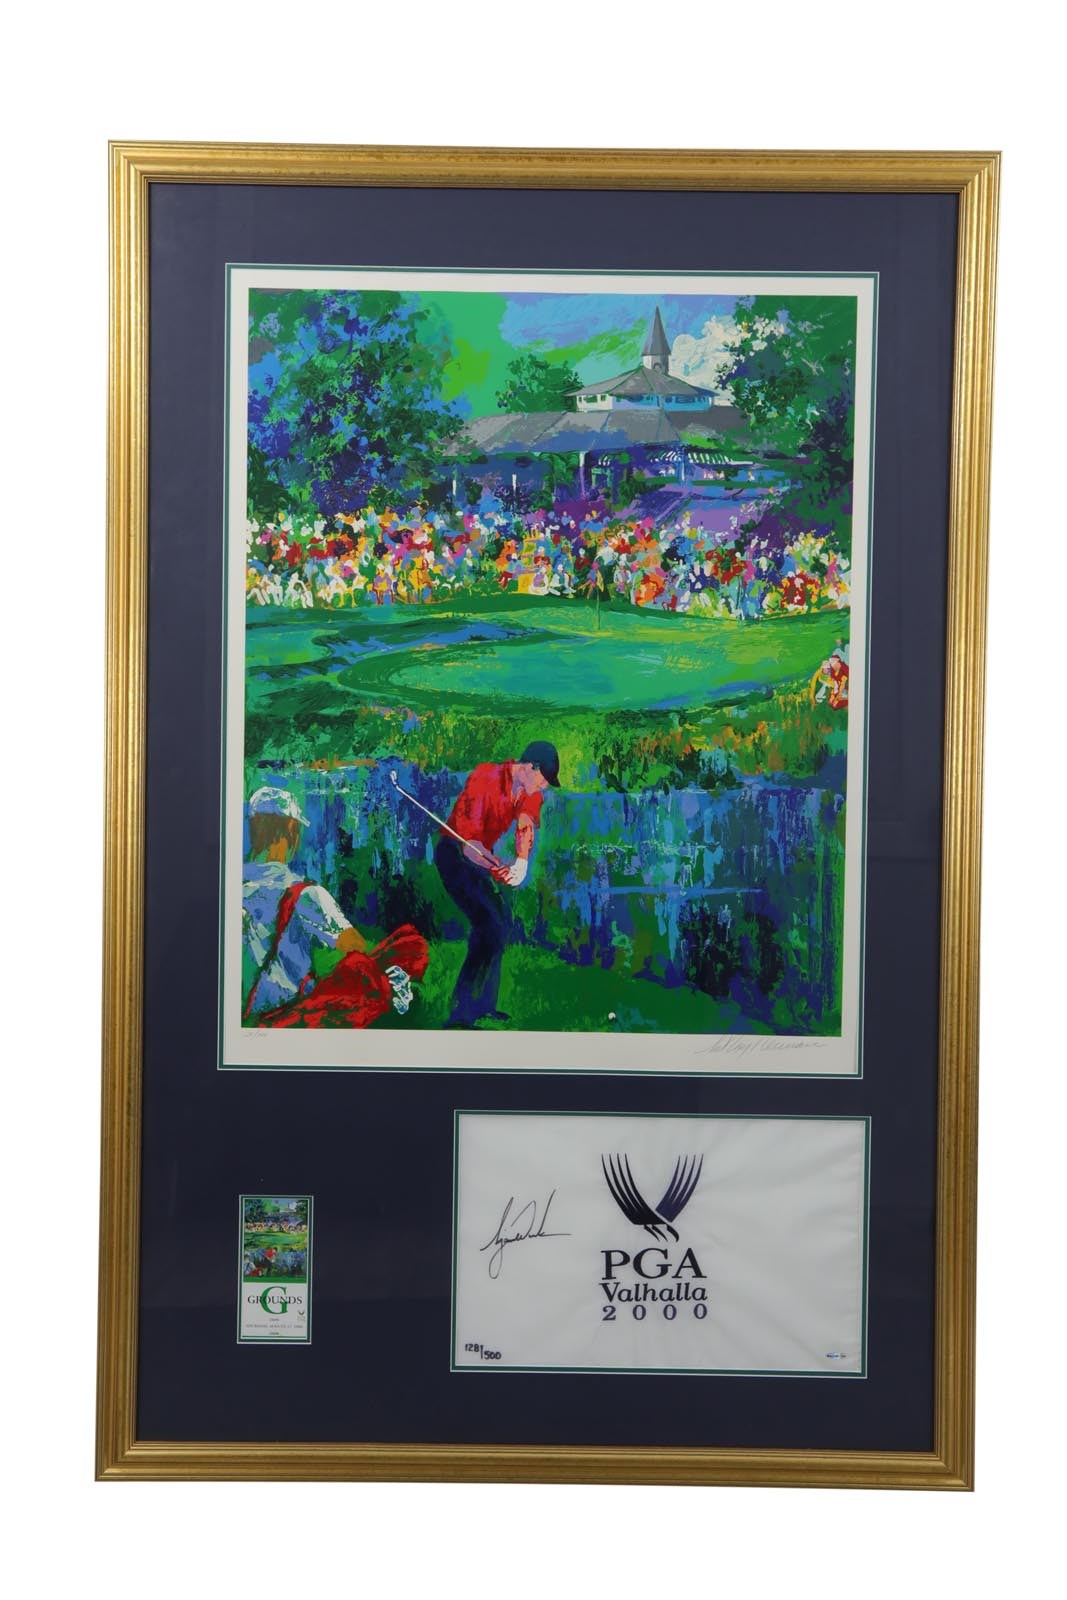 2000 LeRoy Neiman Signed "Valhalla" Print, Tiger Woods Signed Valhalla Flag & Valhalla Ticket Display